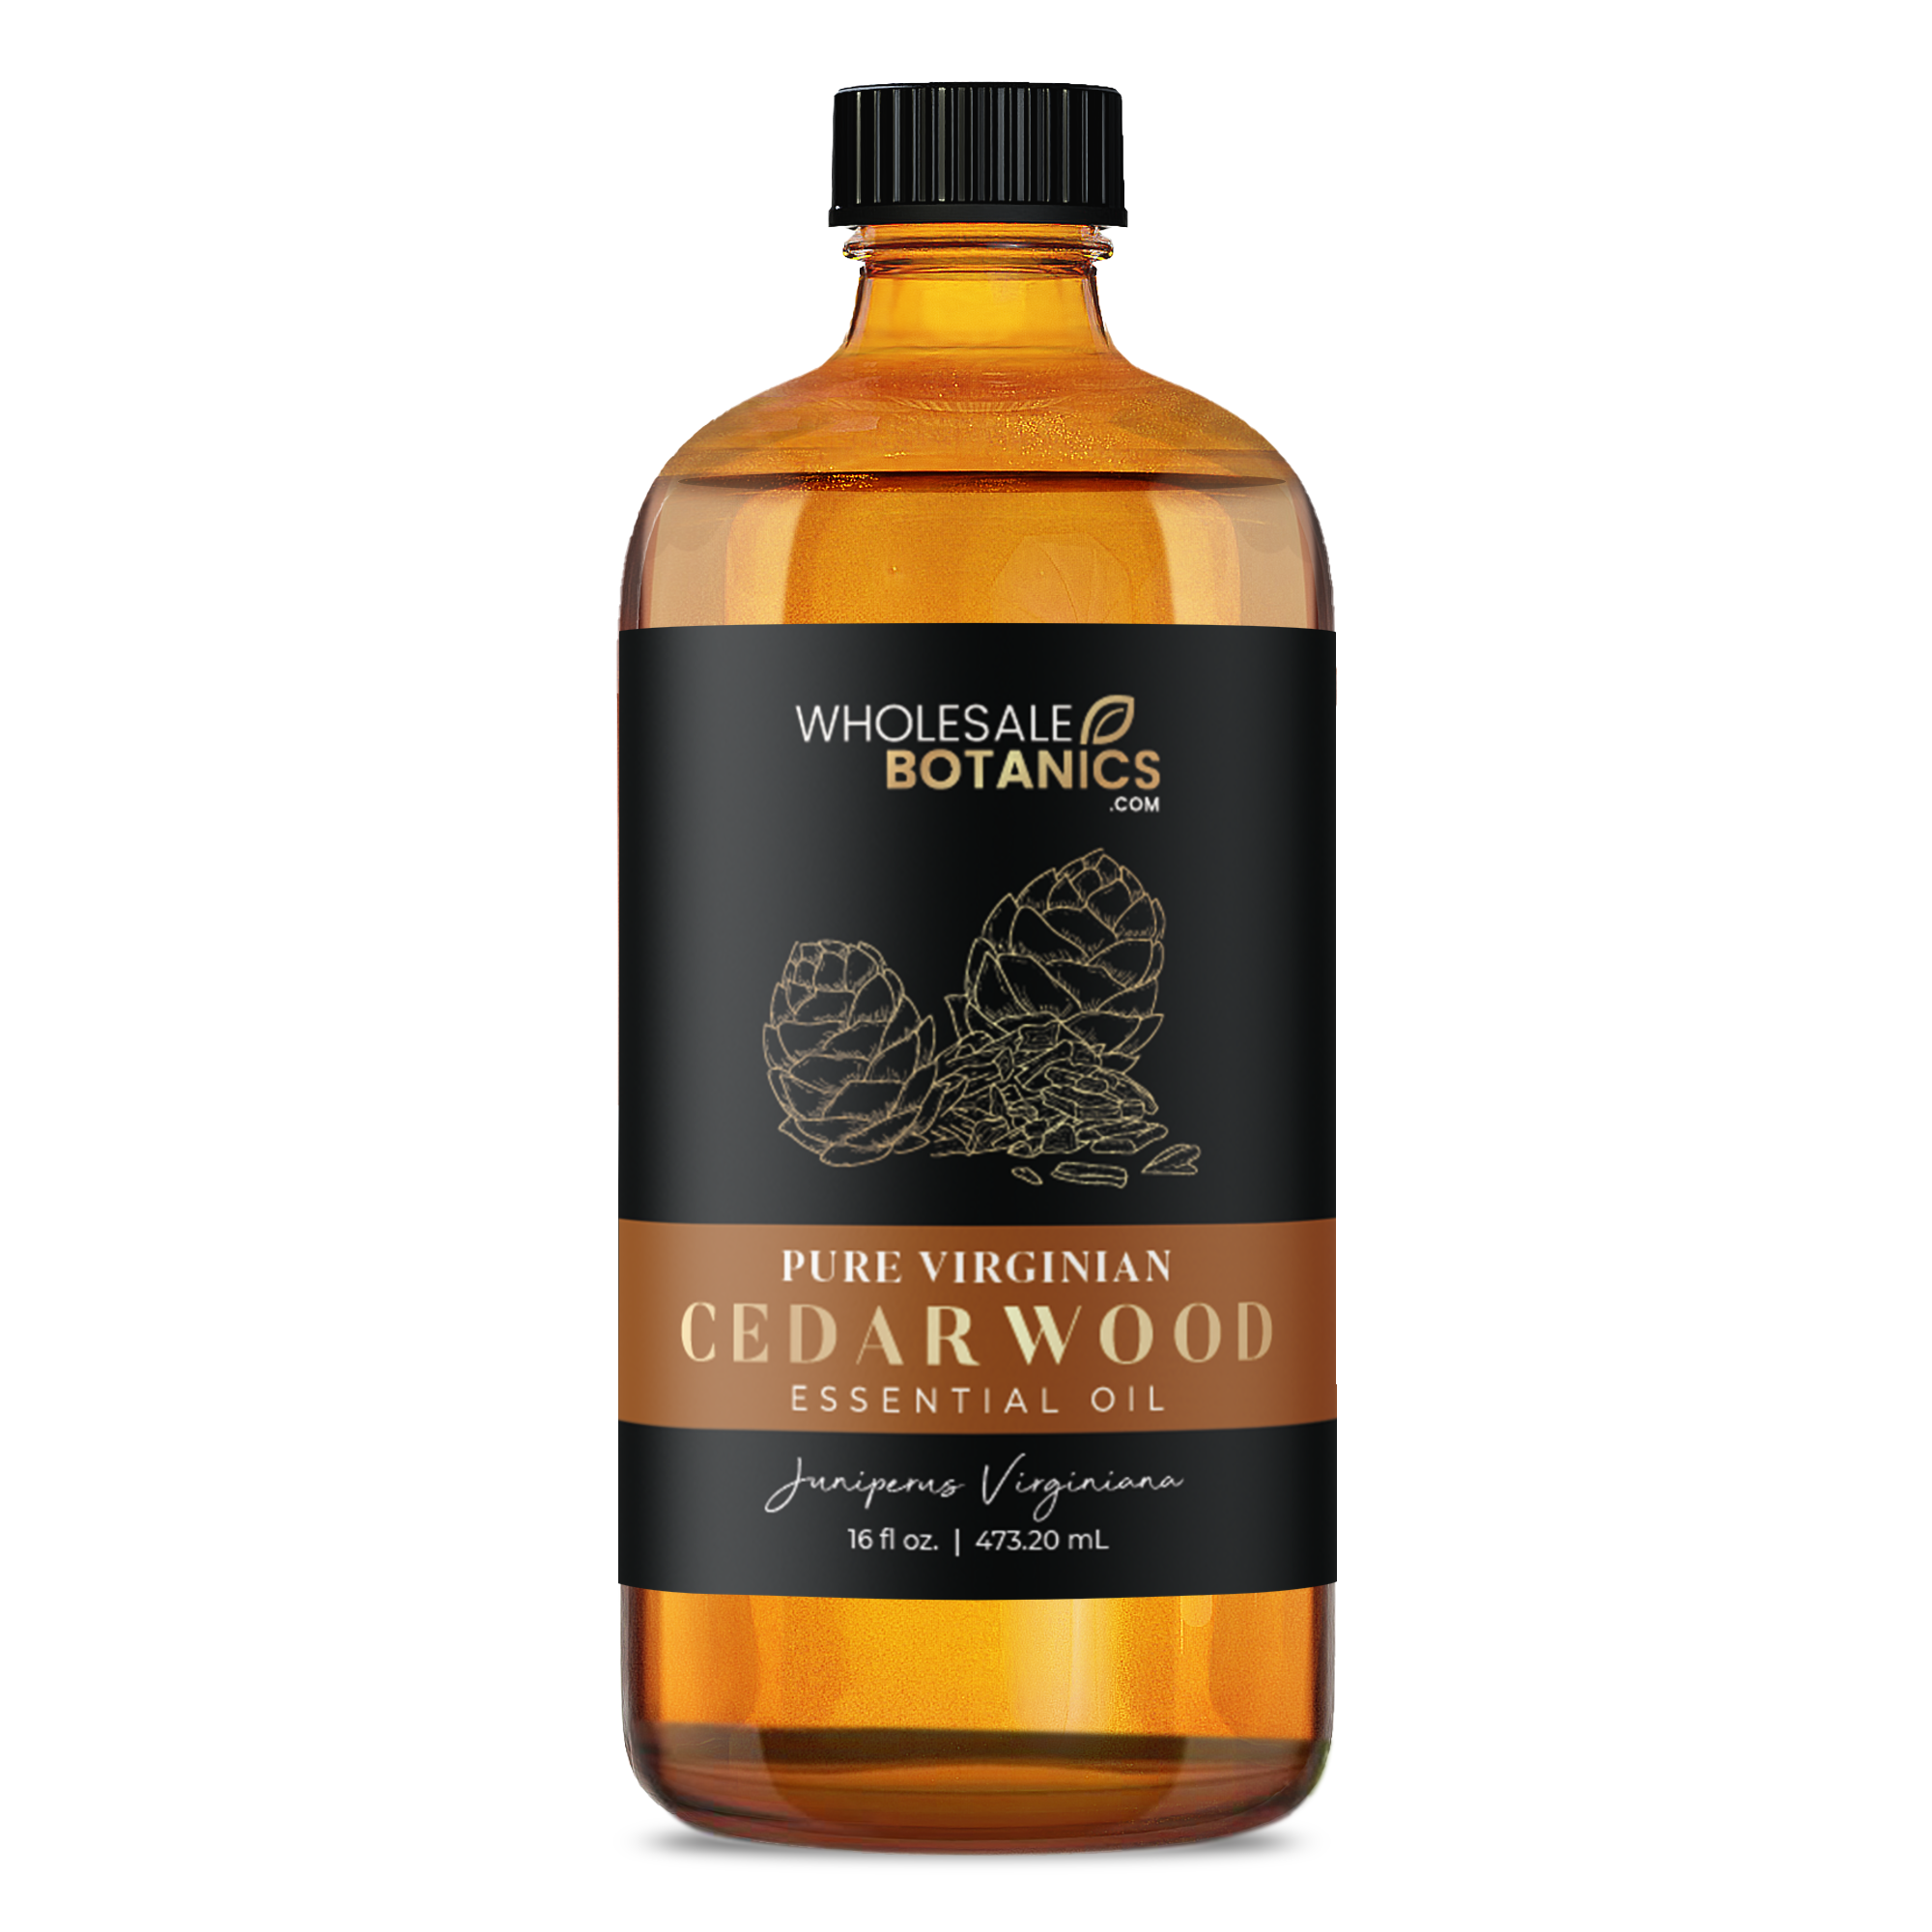 Cedarwood Essential Oil - Purity Virginian Cedarwood - 16 oz